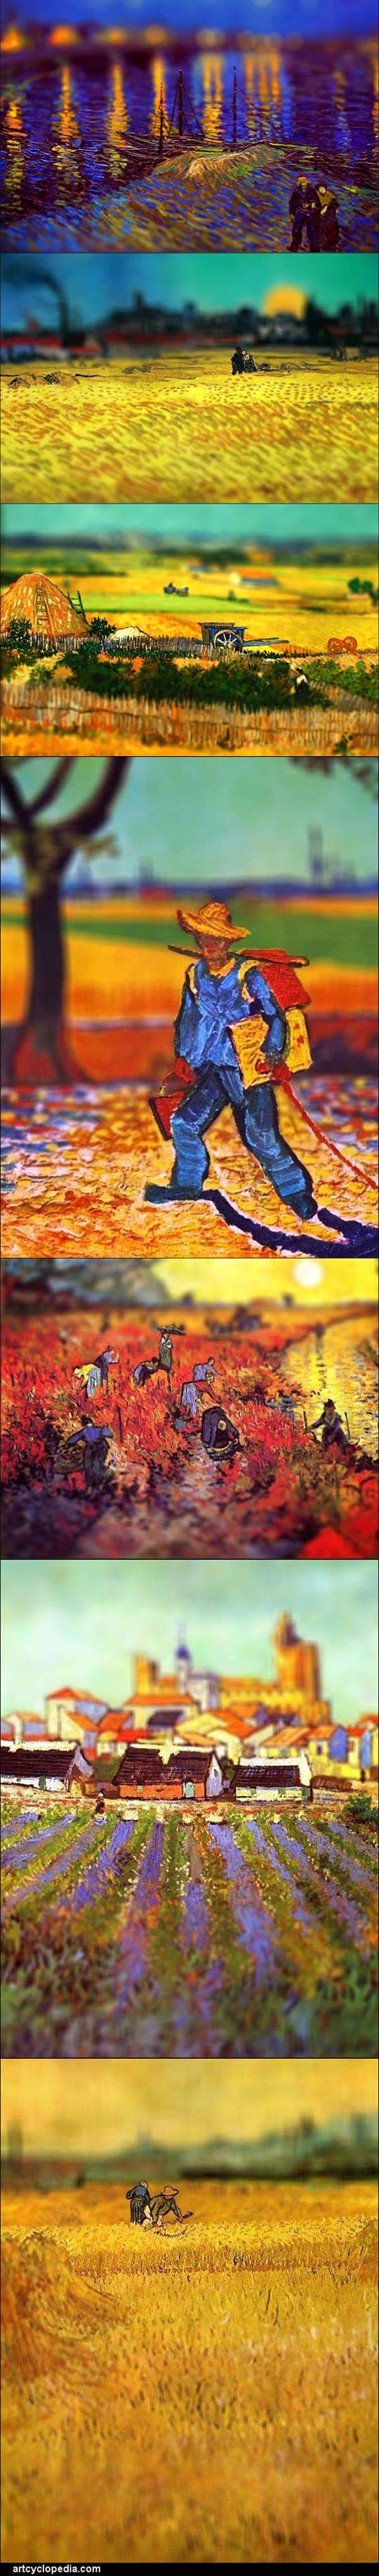 funny-Van-Gogh-shift-effect-painting-blur